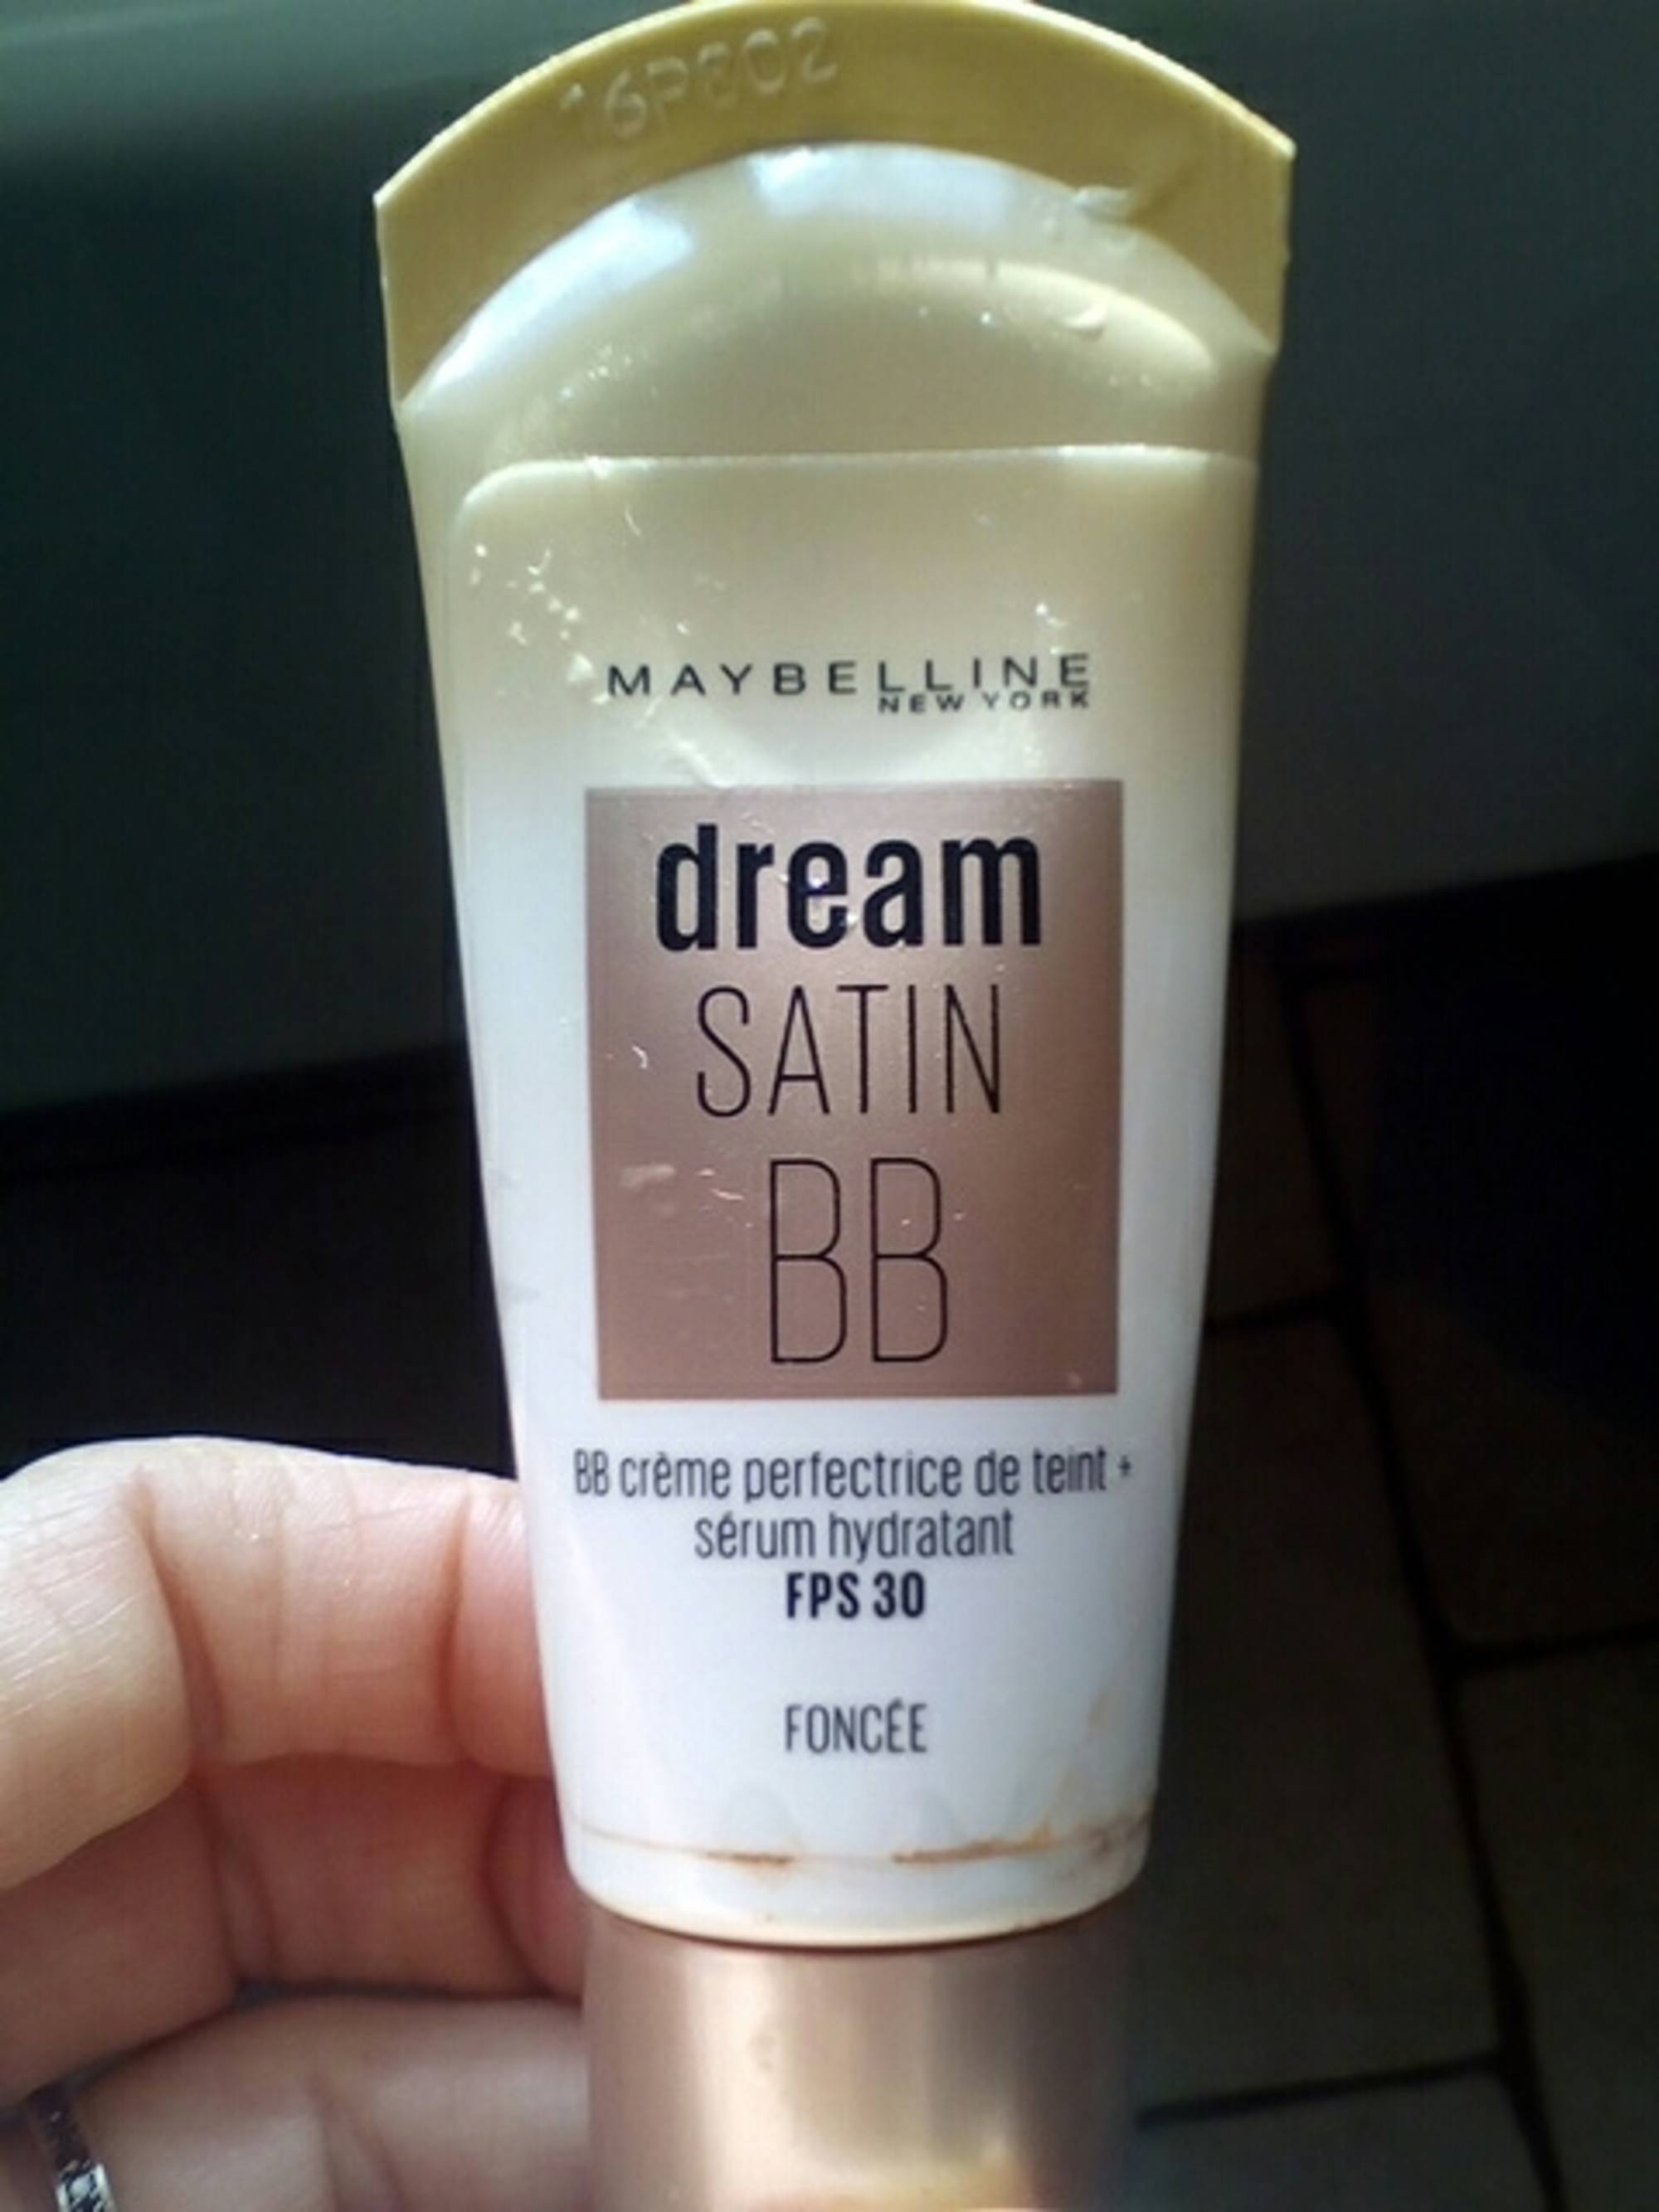 MAYBELLINE - Dream Satin BB - BB crème perfectrice de teint FPS 30